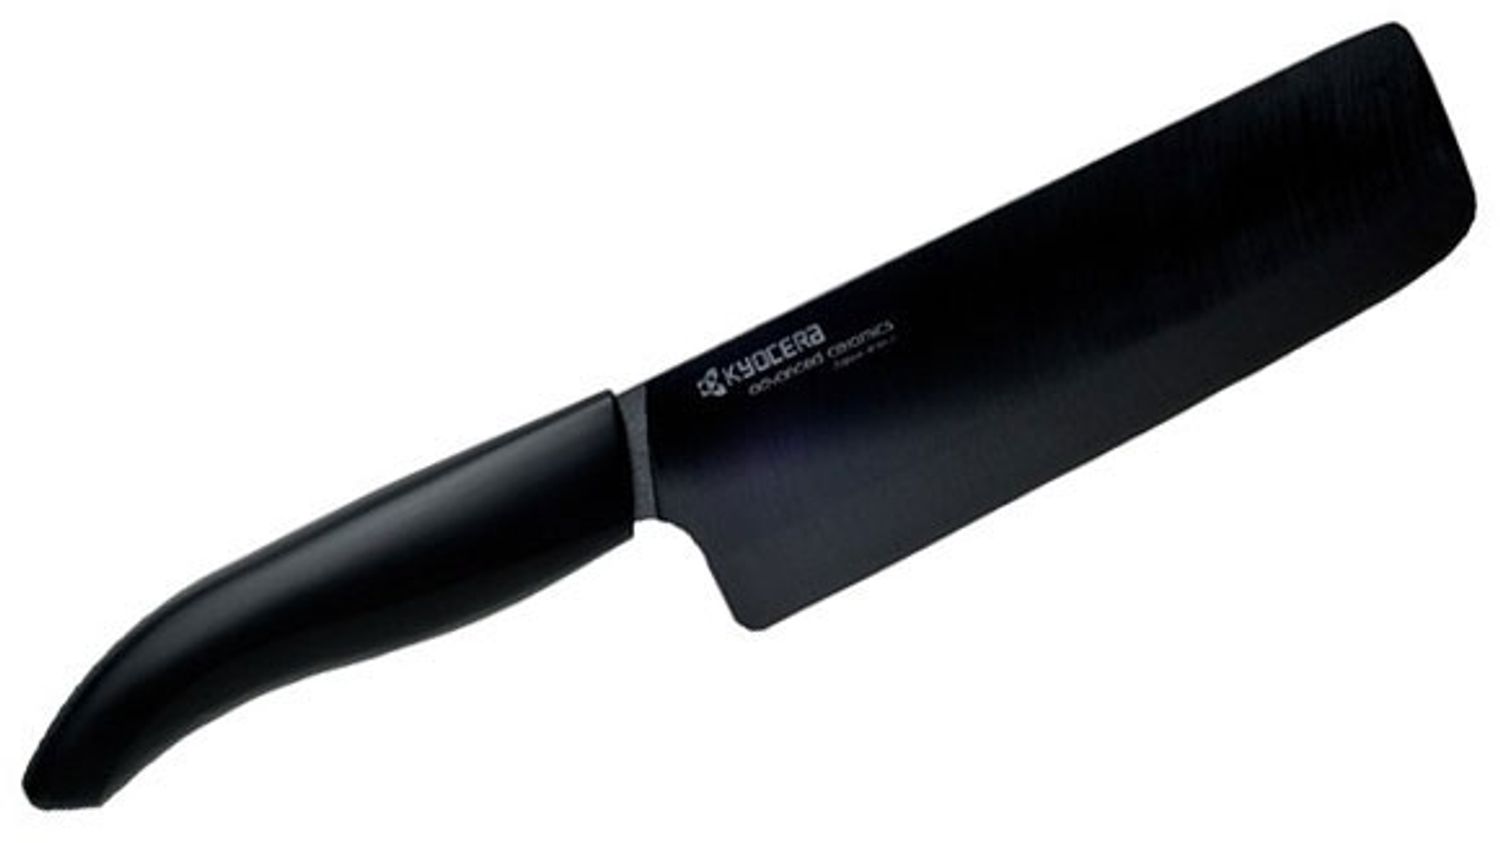 Kyocera - Blade Guard - Ceramic blade cover from 11.5 cm. to 13 cm.